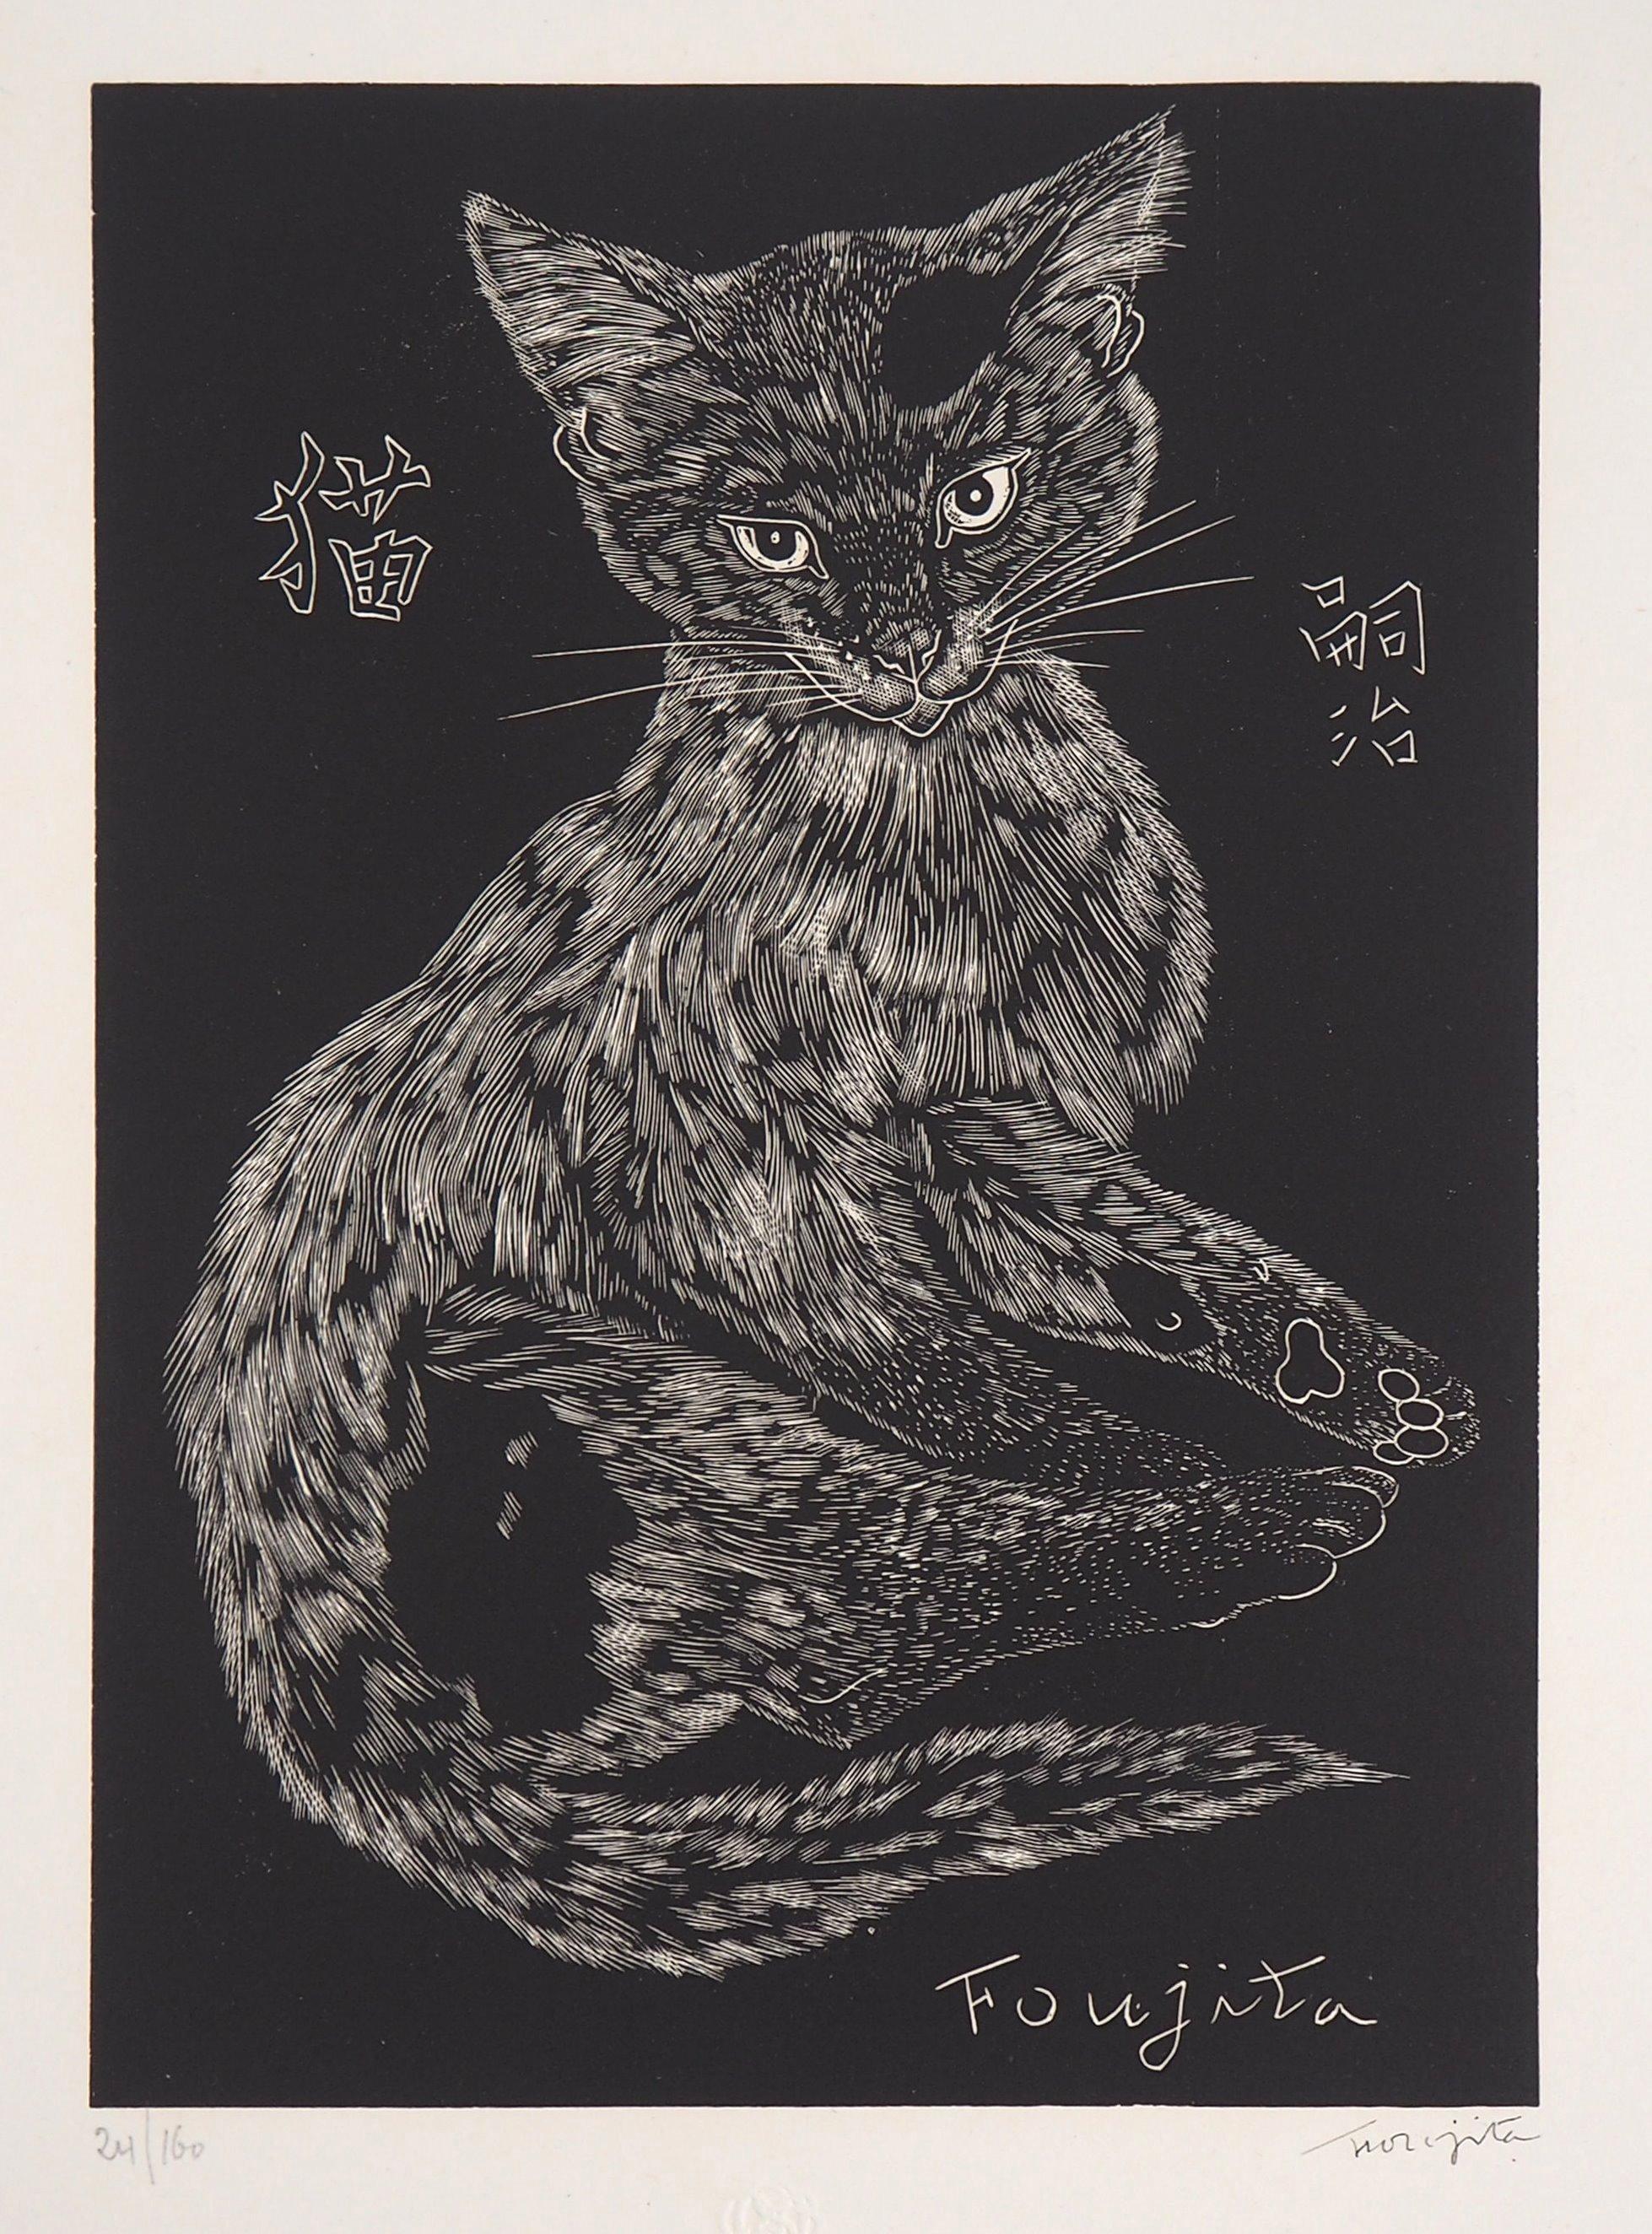 Leonard Tsuguharu Foujita Animal Print – Cat - Original Holzschnitt, handsigniert und nummeriert /160 - Buisson #27-03